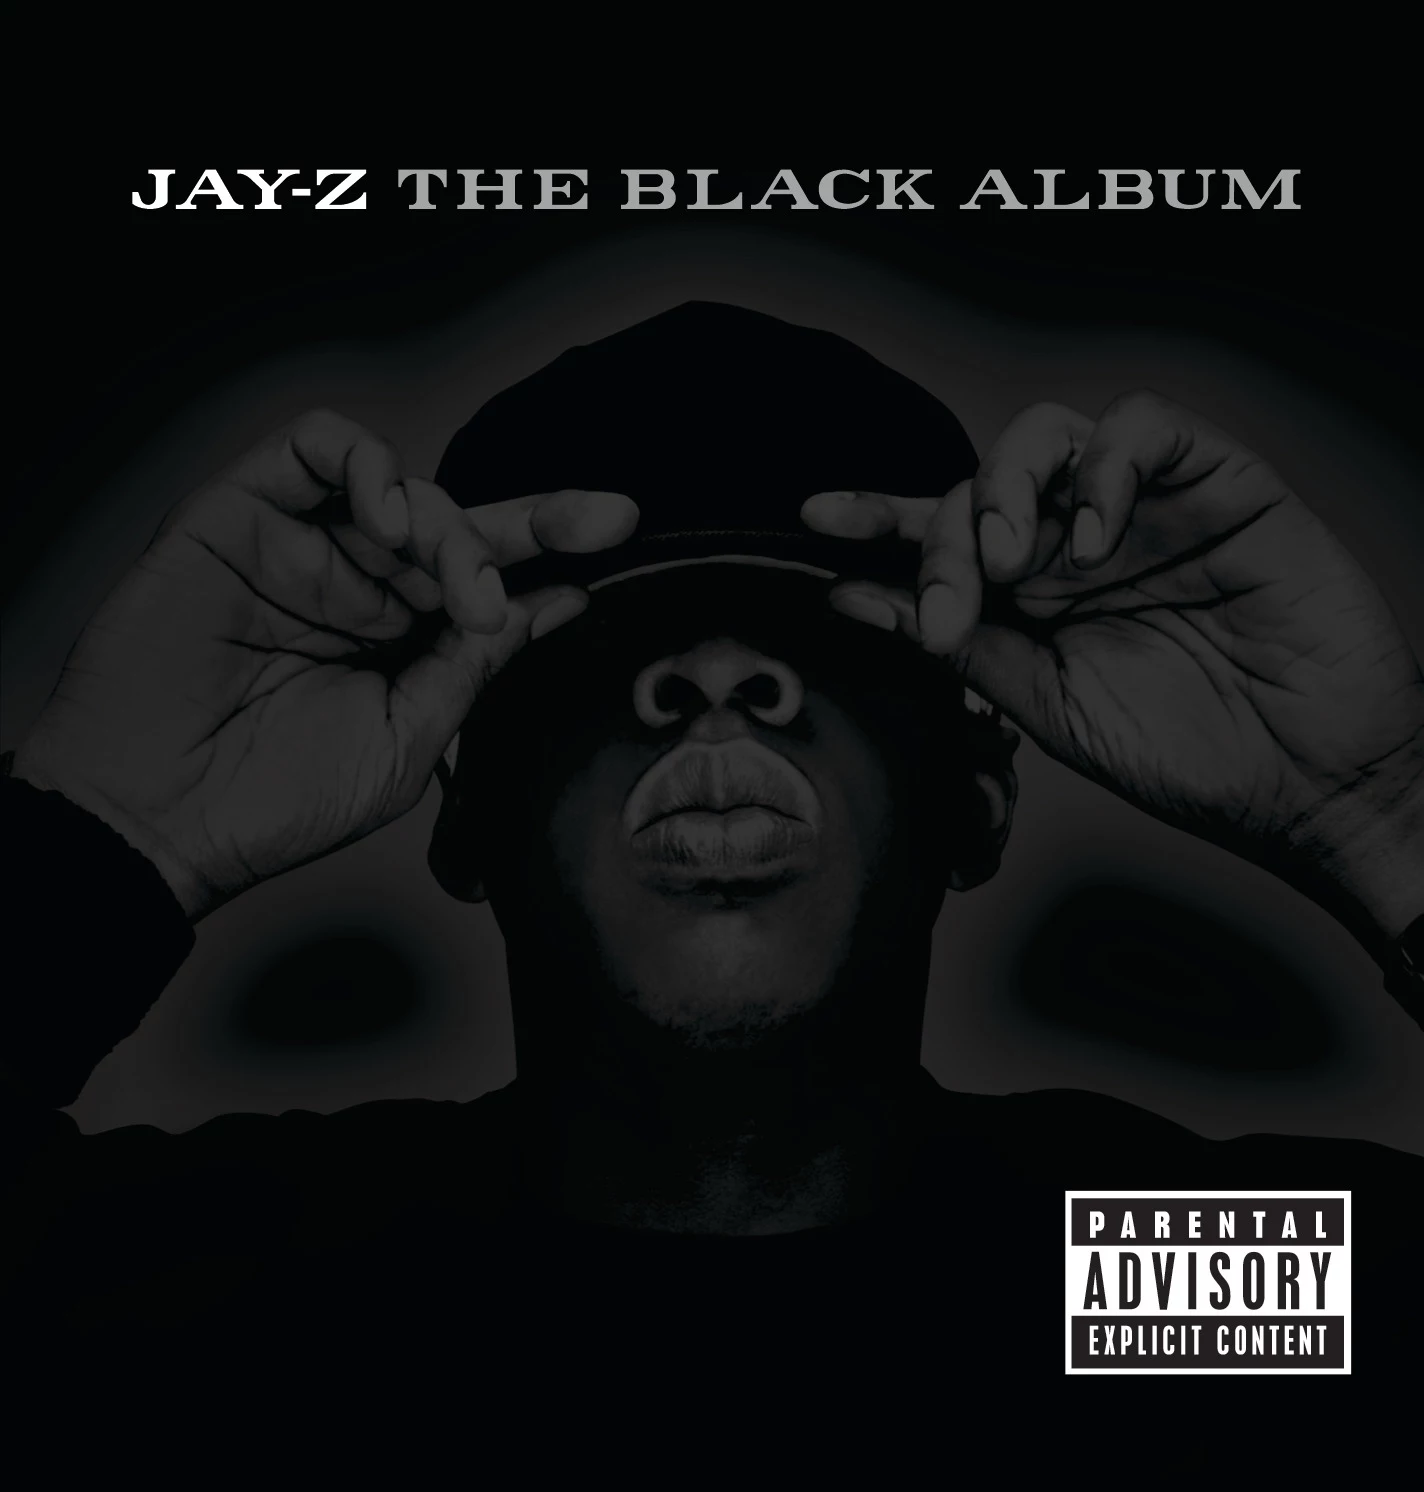 https://townsquare.media/site/812/files/2019/10/Jay-Z-The-Black-Album.jpg